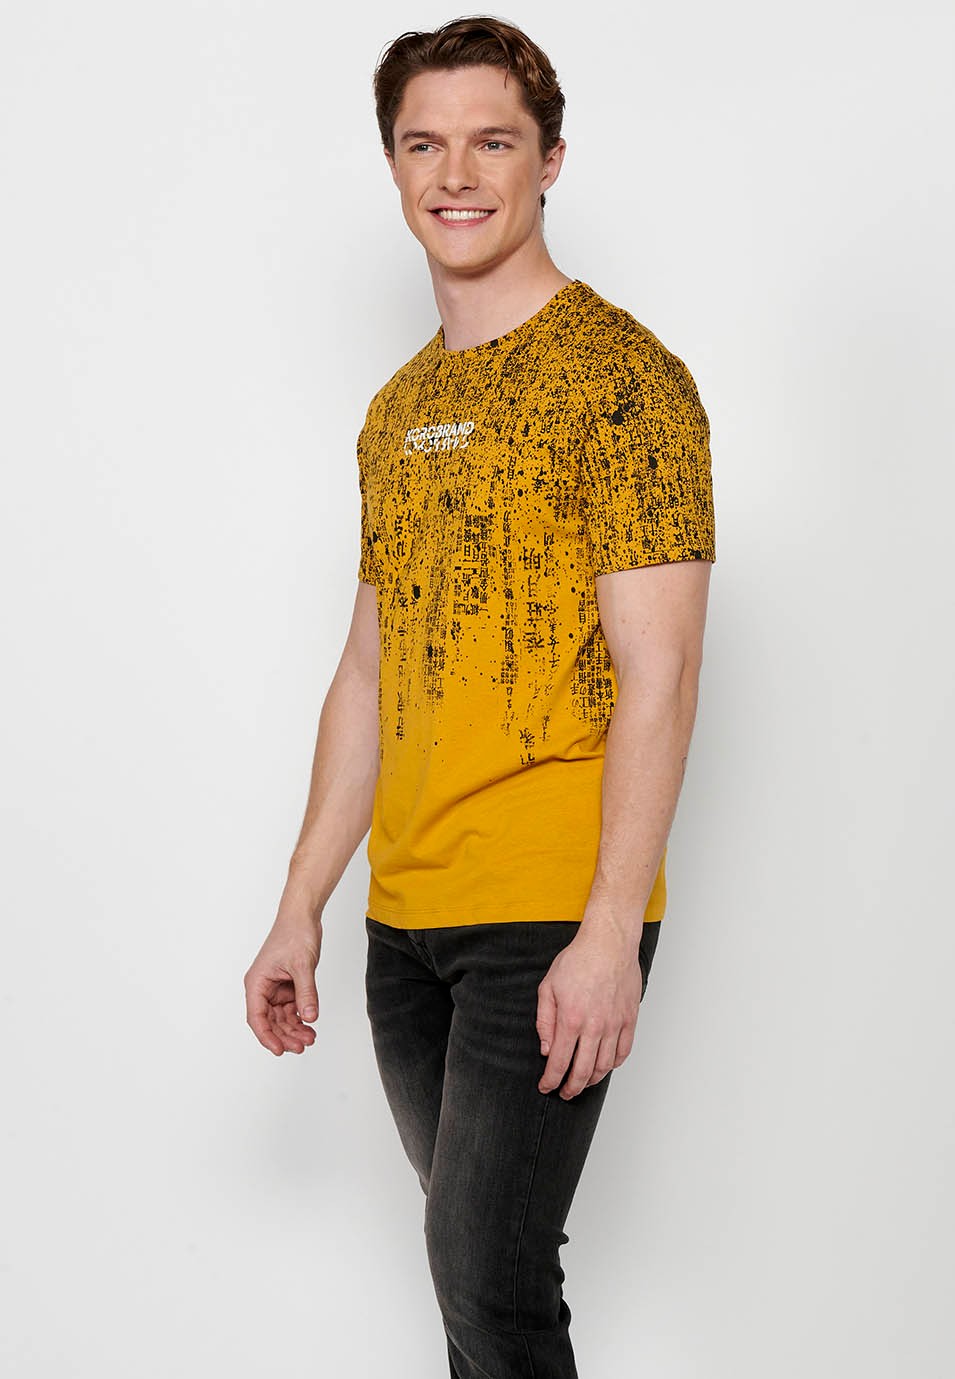 Camiseta de manga corta de algodón, color amarillo para hombre 5